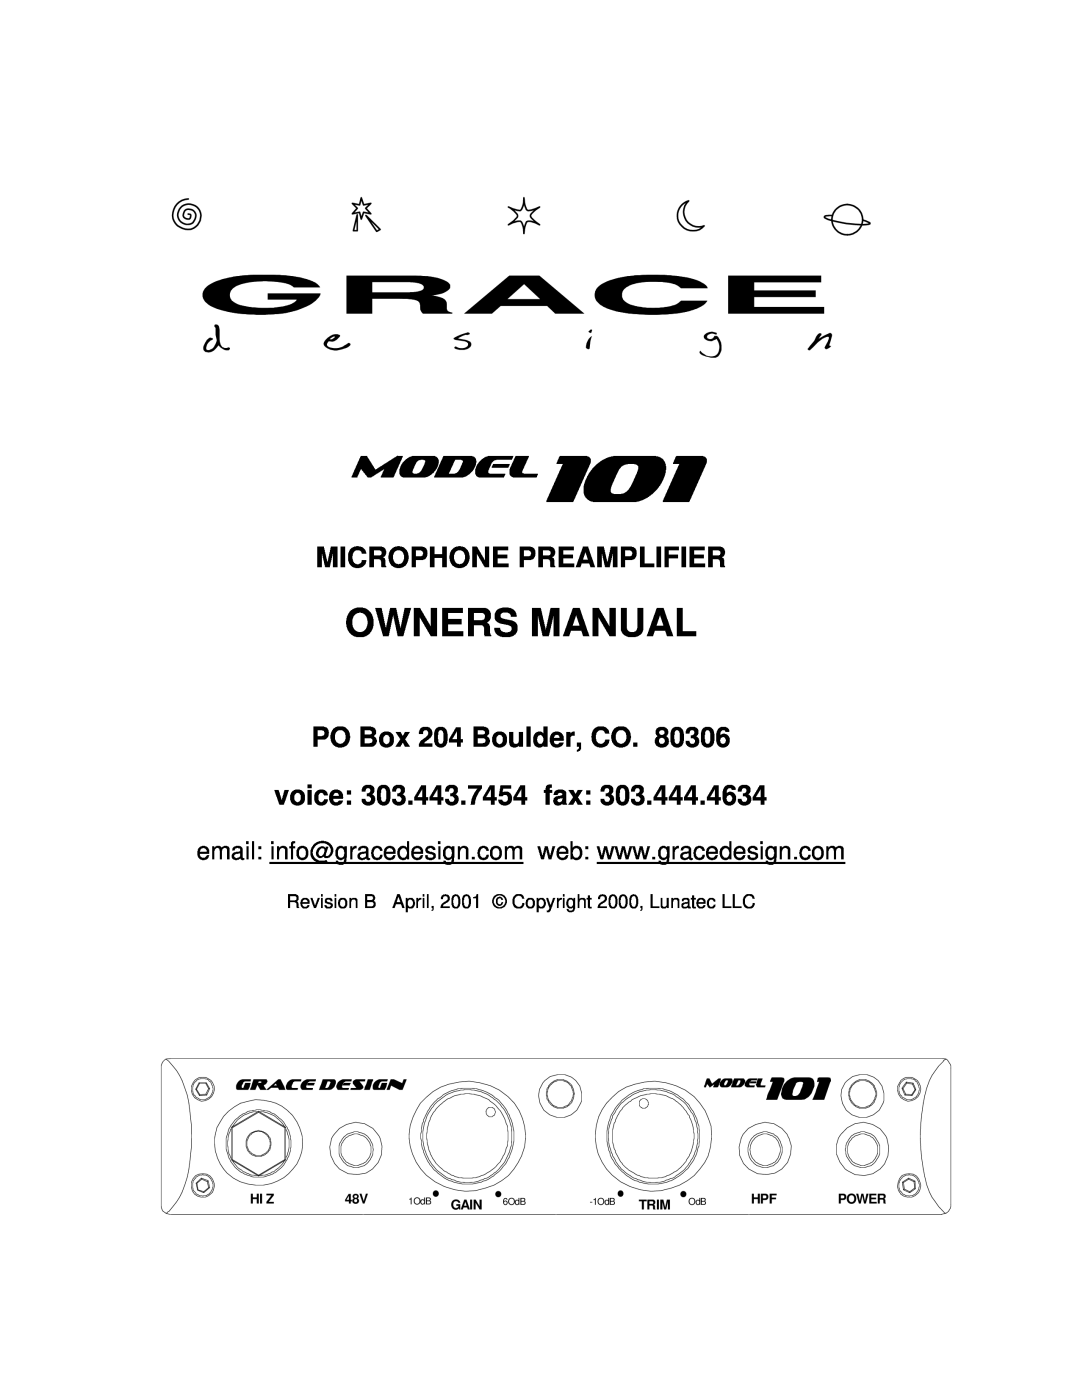 Boulder Amplifiers owner manual model101, Microphone Preamplifier, PO Box 204 Boulder, CO. voice 303.443.7454 fax, Hi Z 